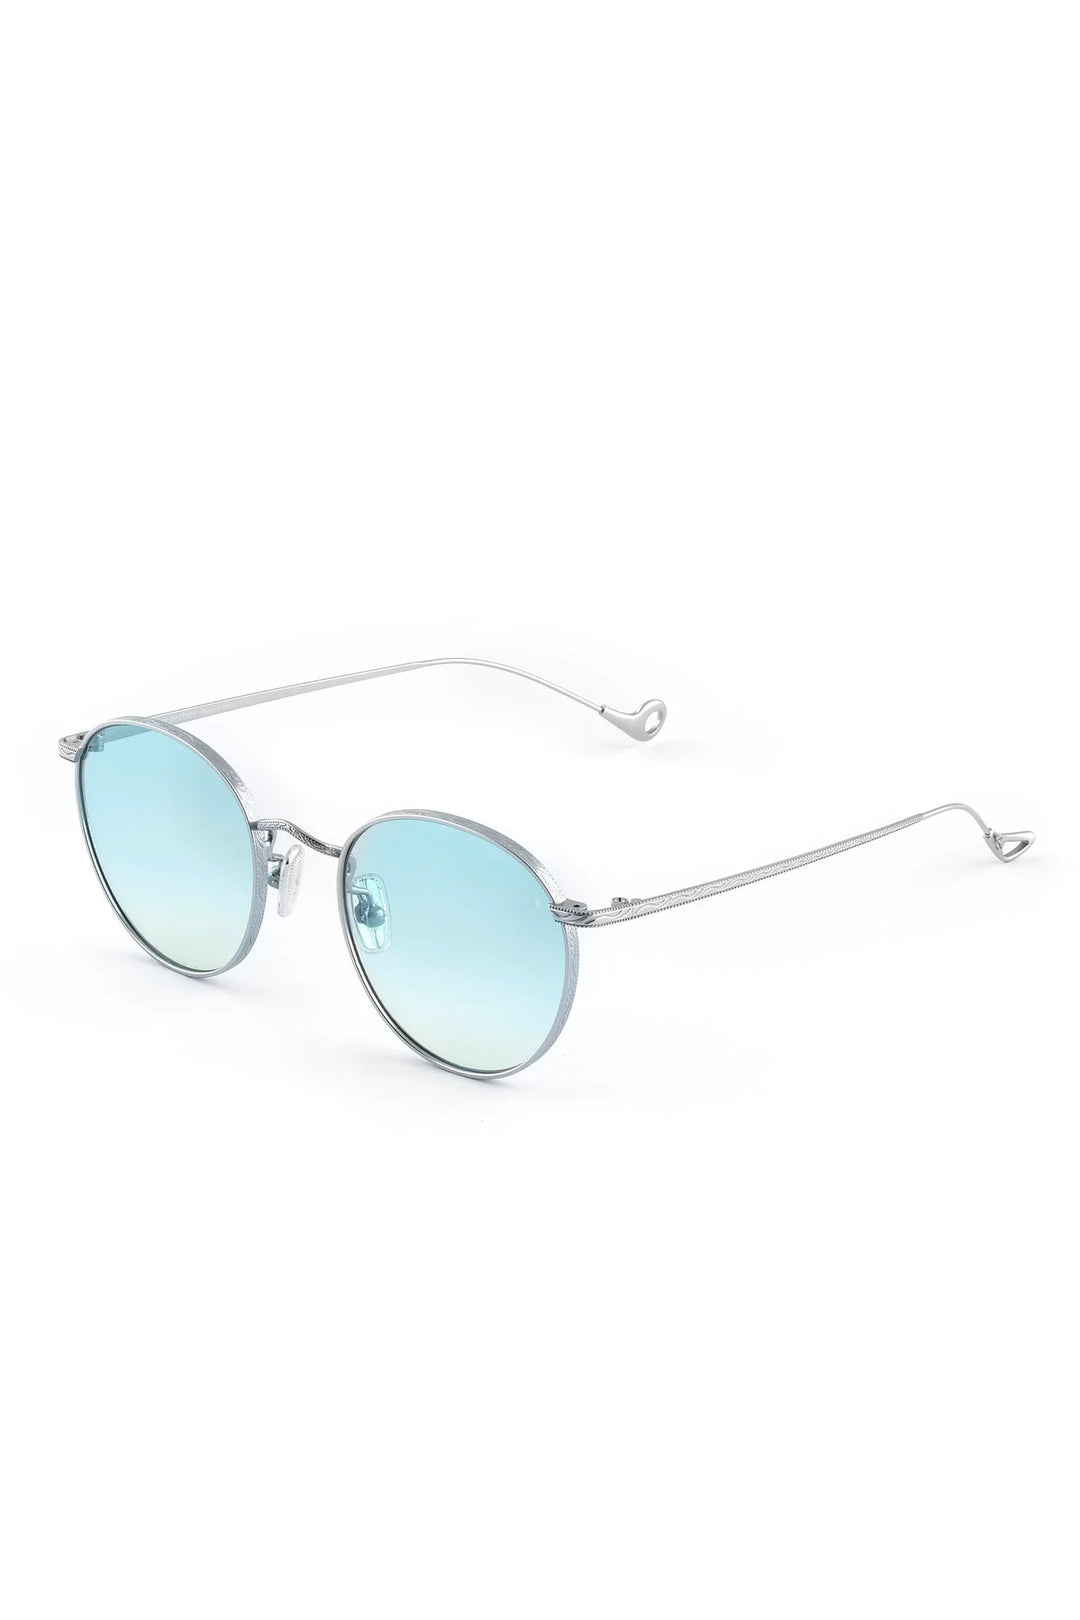 Jockey Sunglasses - Silver / Light Blue Gradient